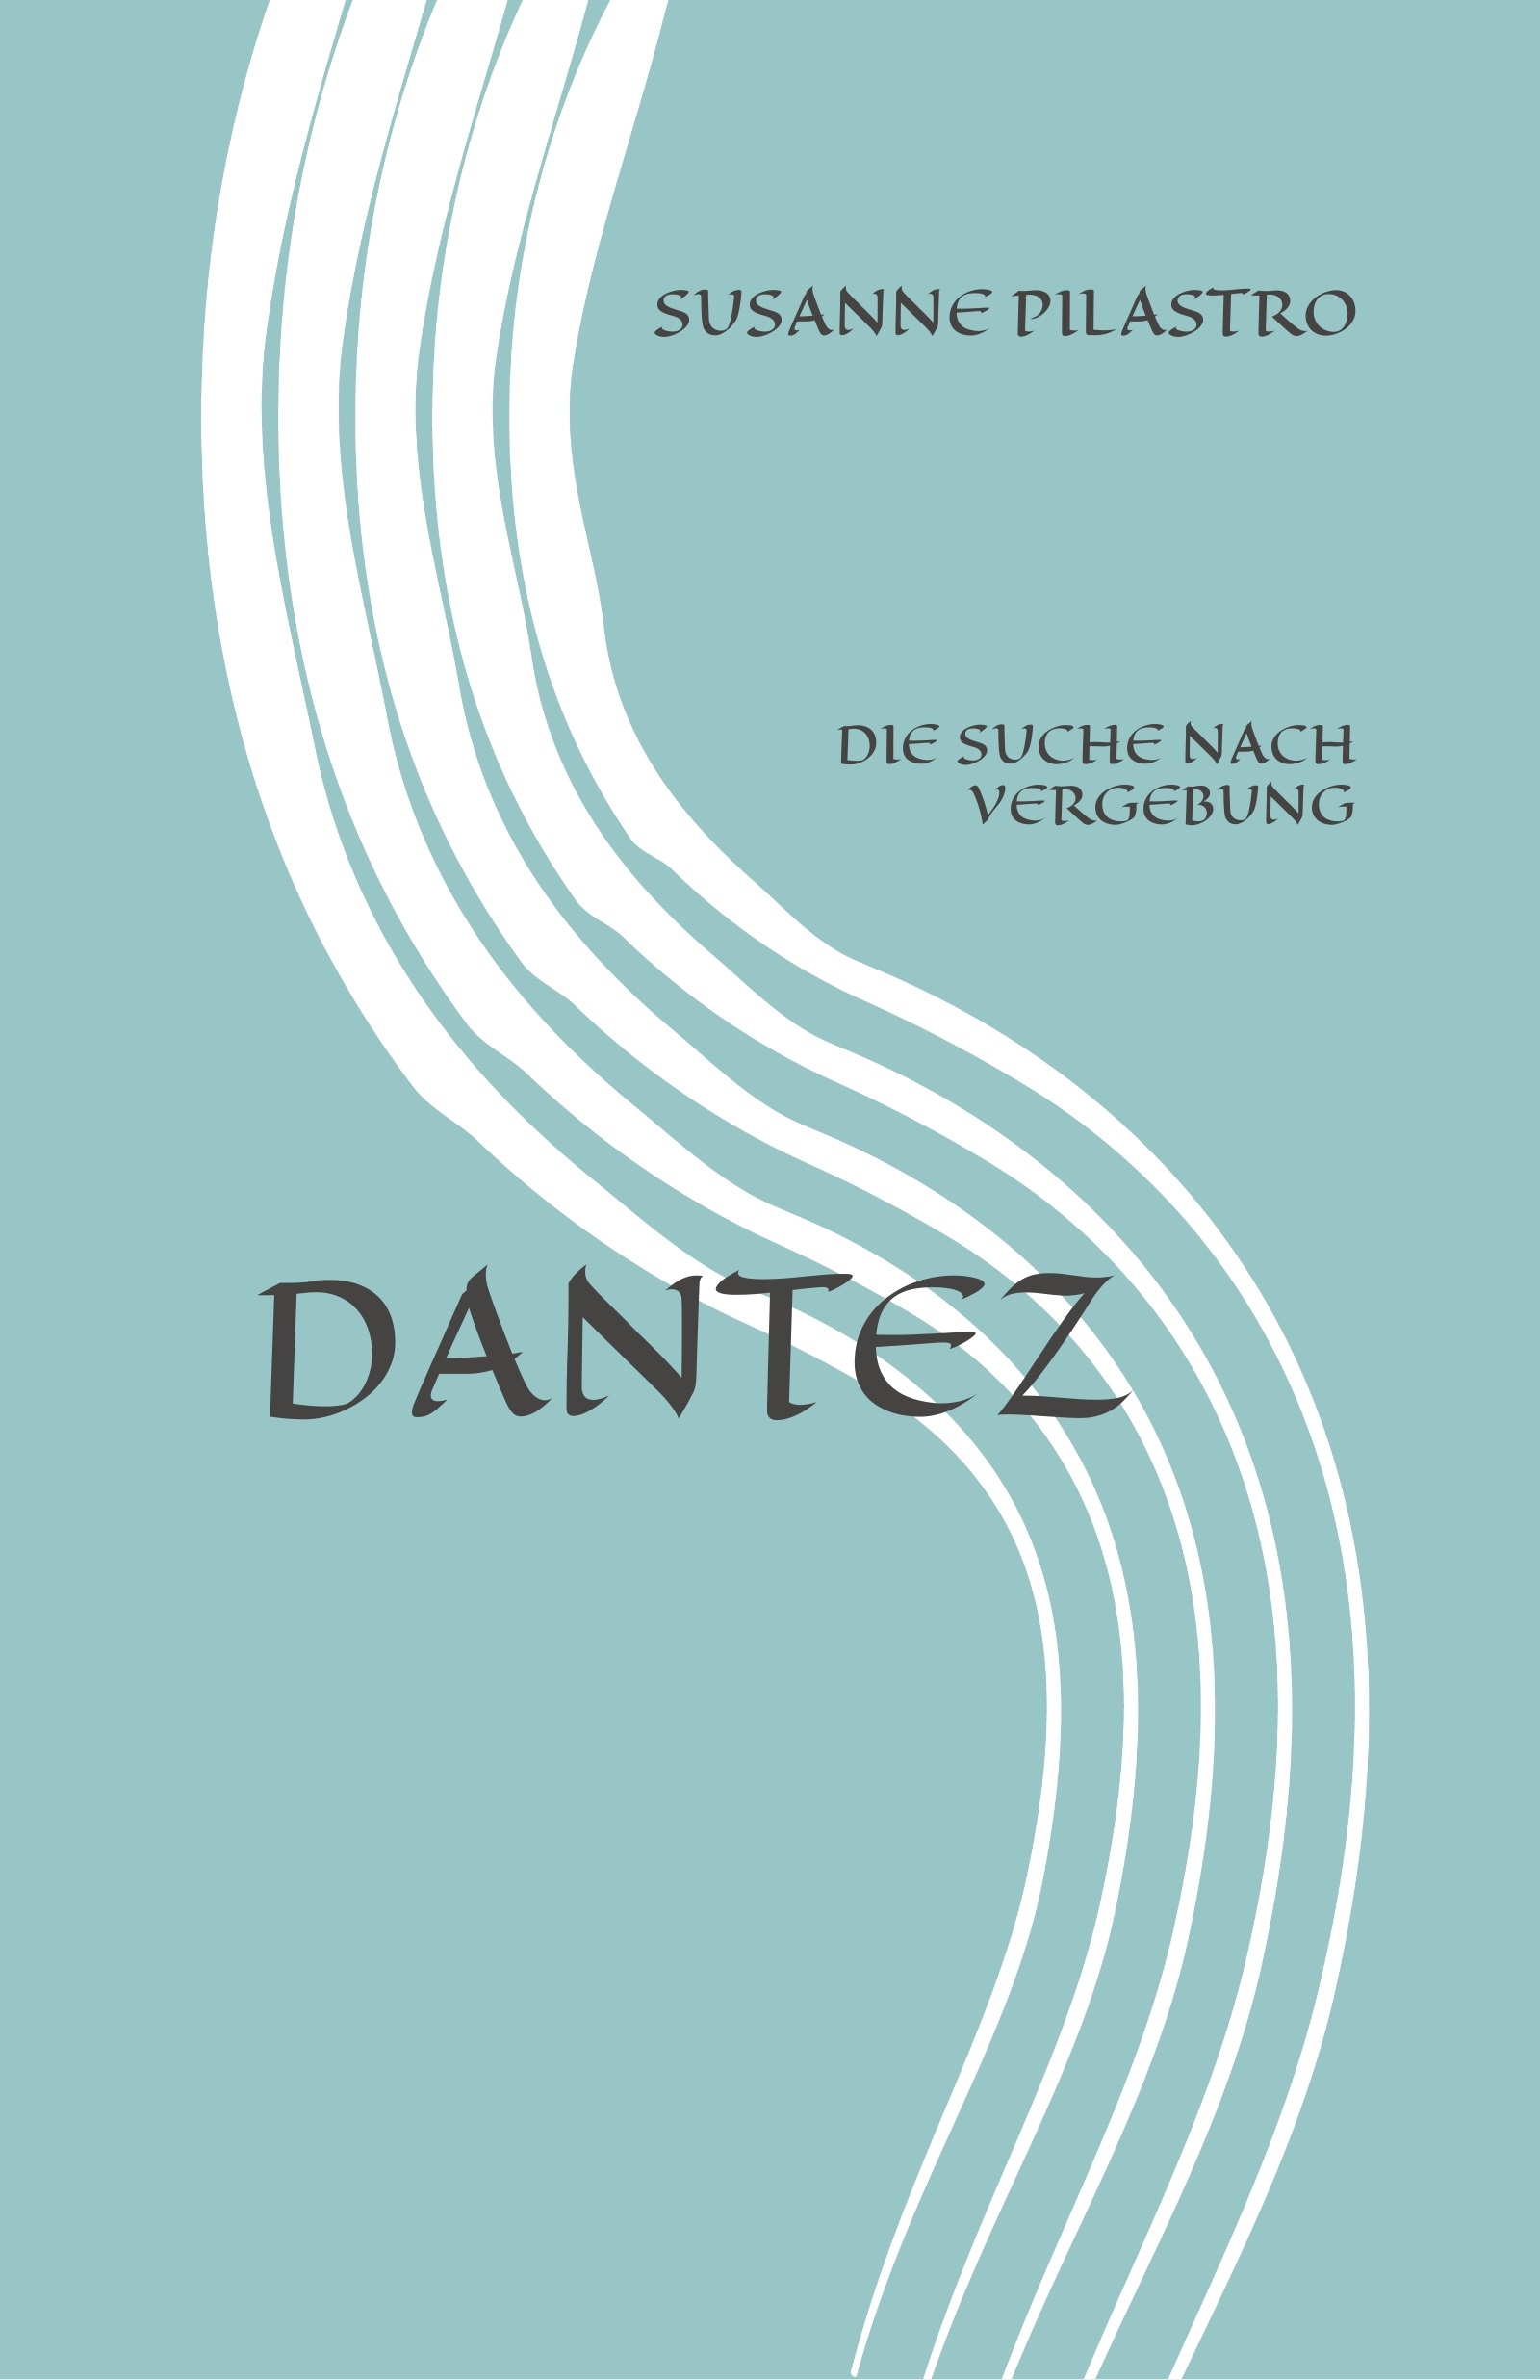 DANTEZ II